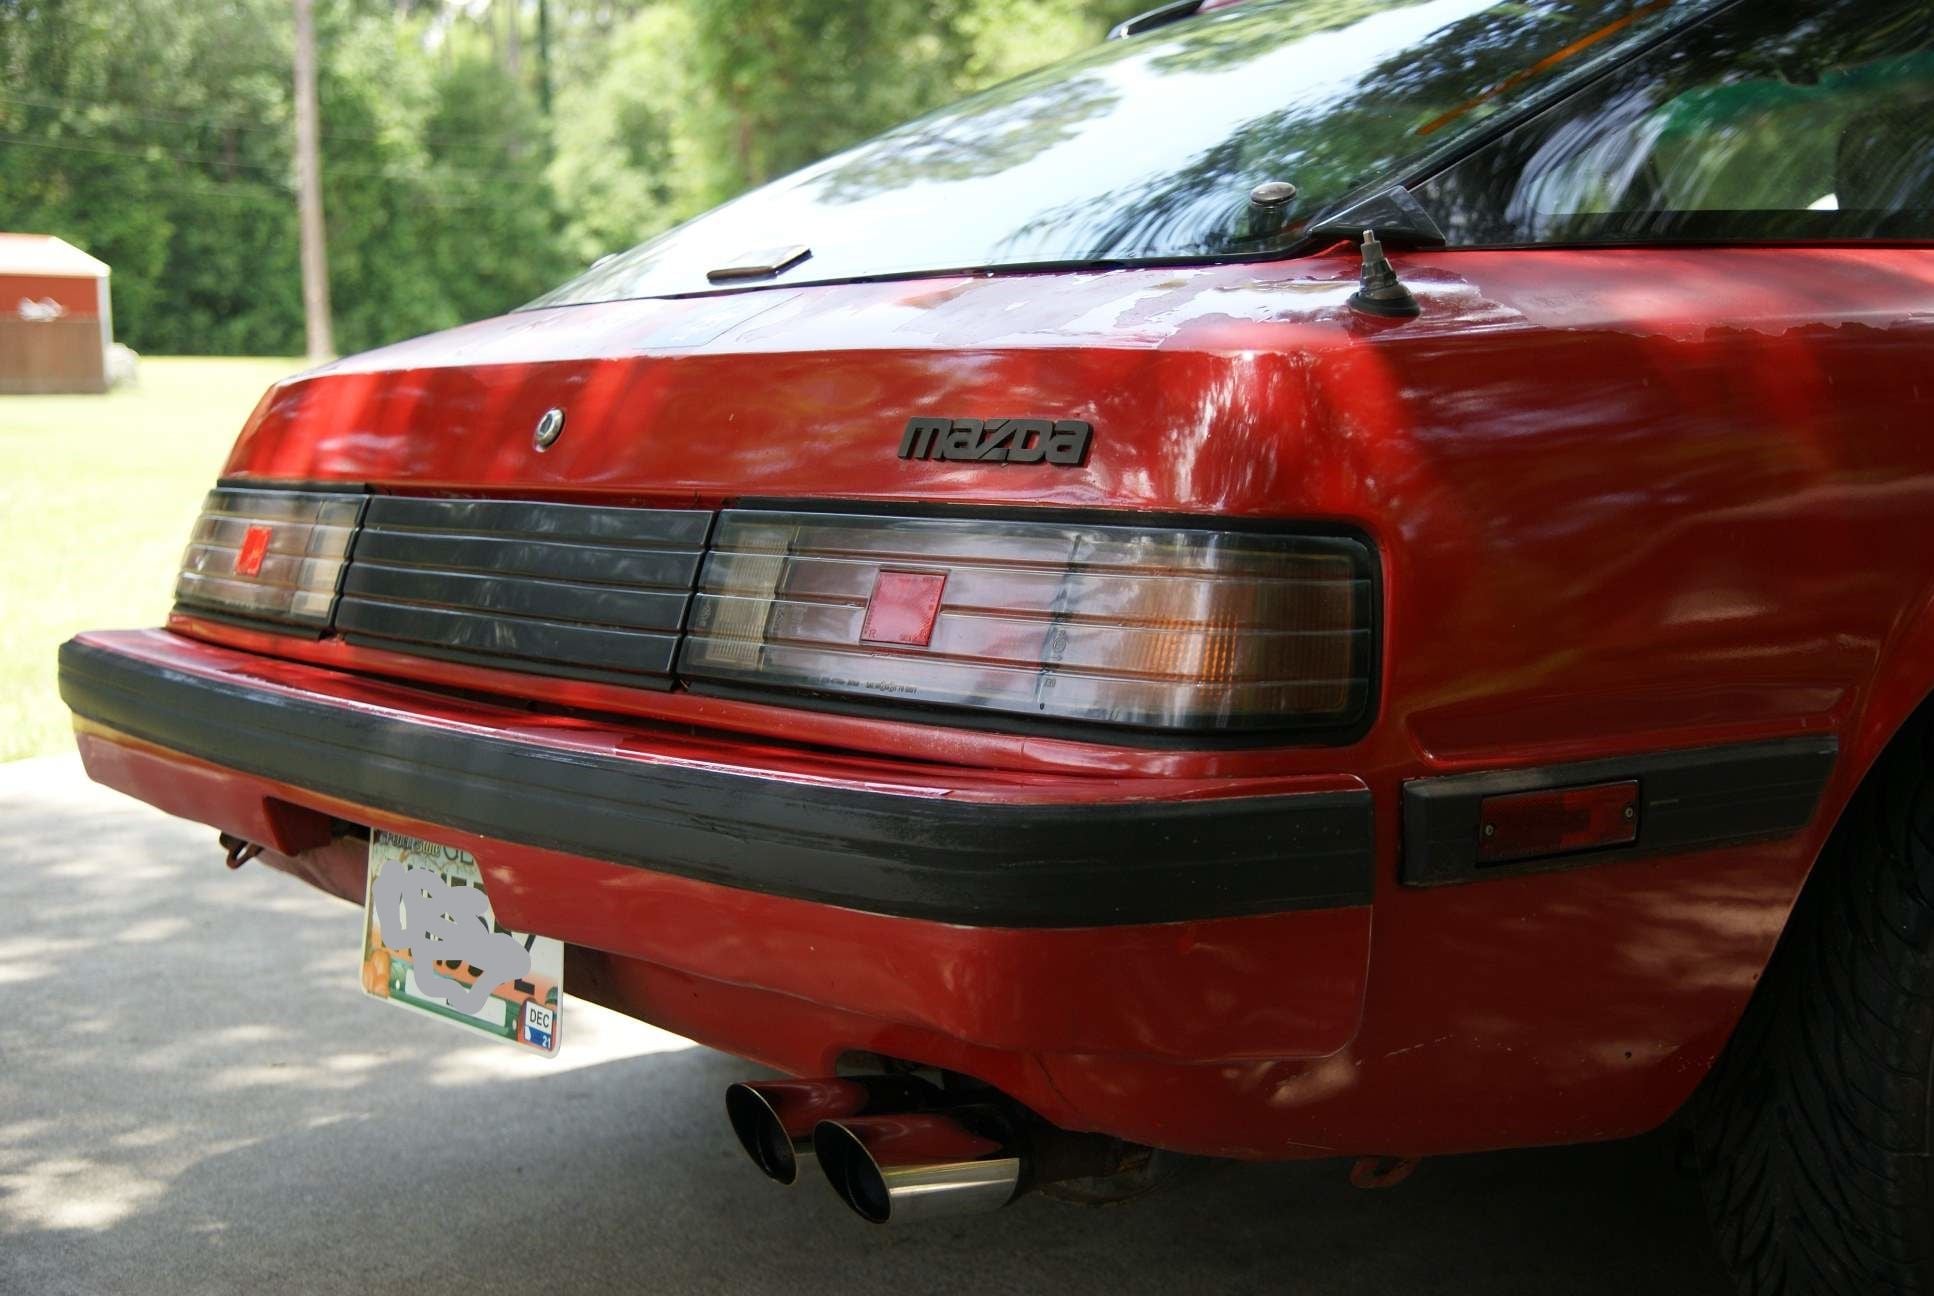 1983 Mazda RX-7 - '83 GS in South Georgia - Used - VIN 000000000000000 - Leesburg, GA 31763, United States